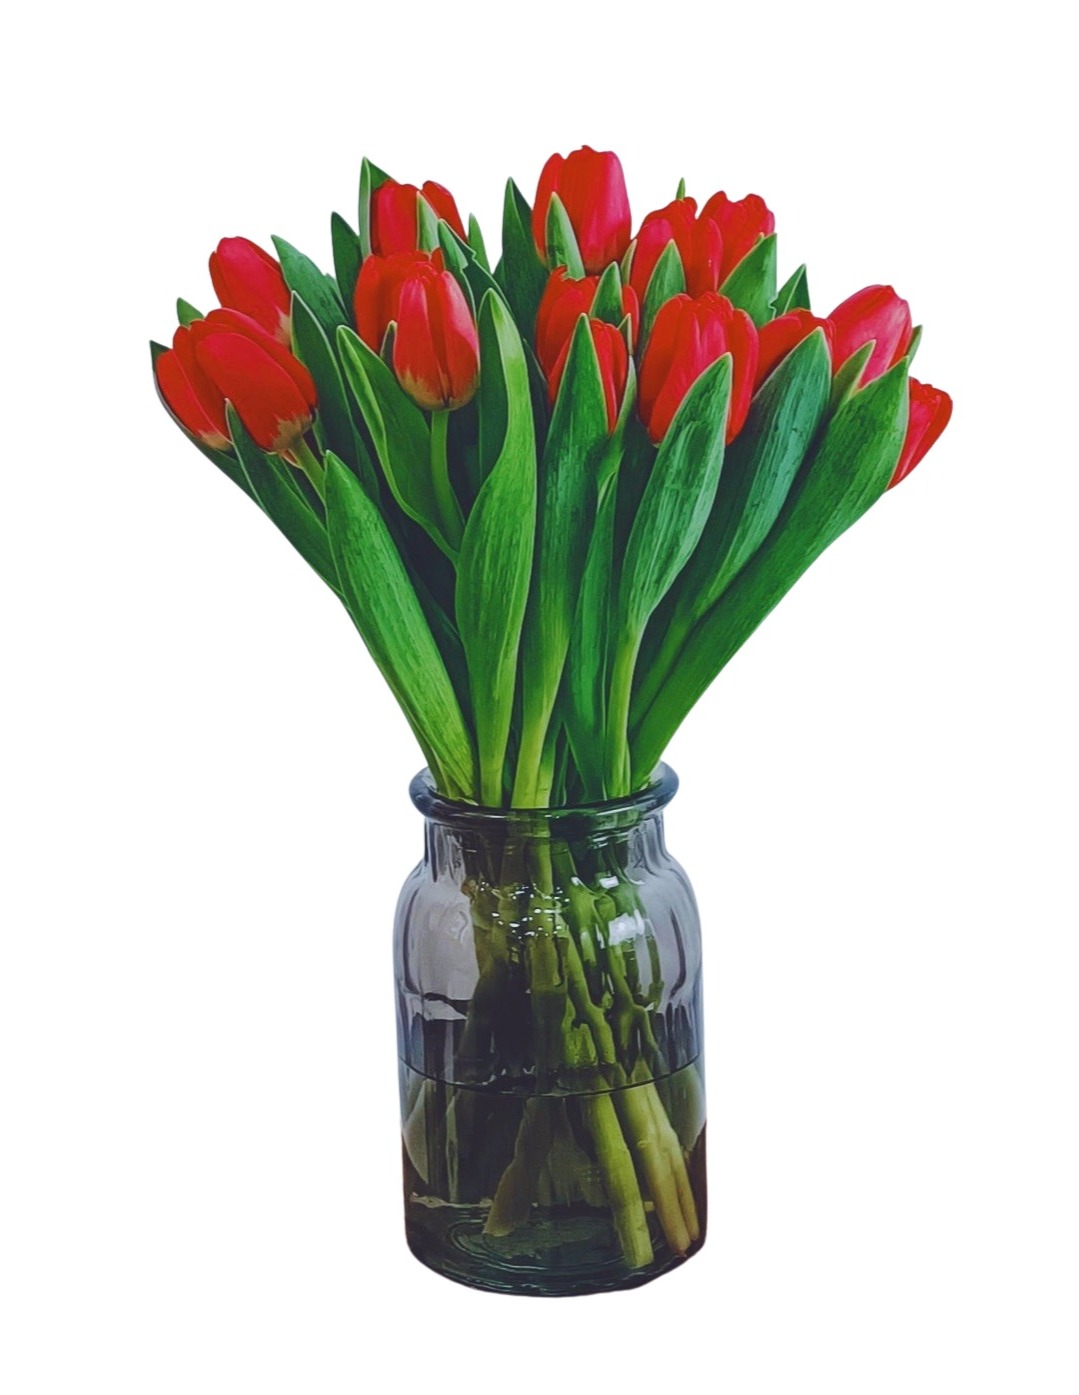 Ram de Tulips Vermells "Meraki"